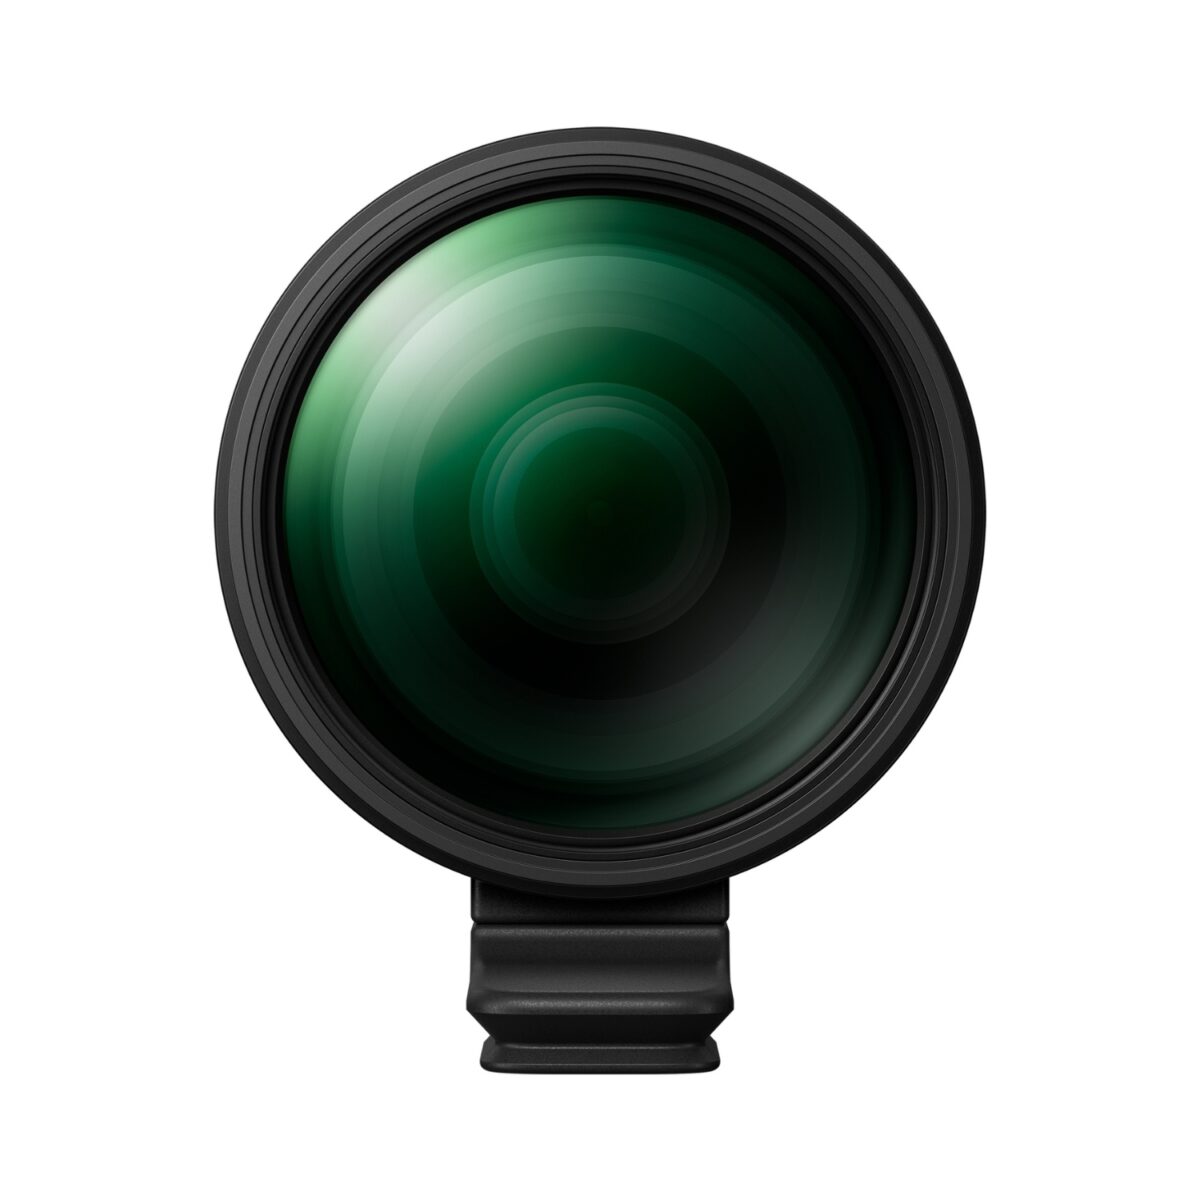 OM SYSTEM M.Zuiko Digital ED 150 600mm F5.0 6.3 IS Lens 6 1